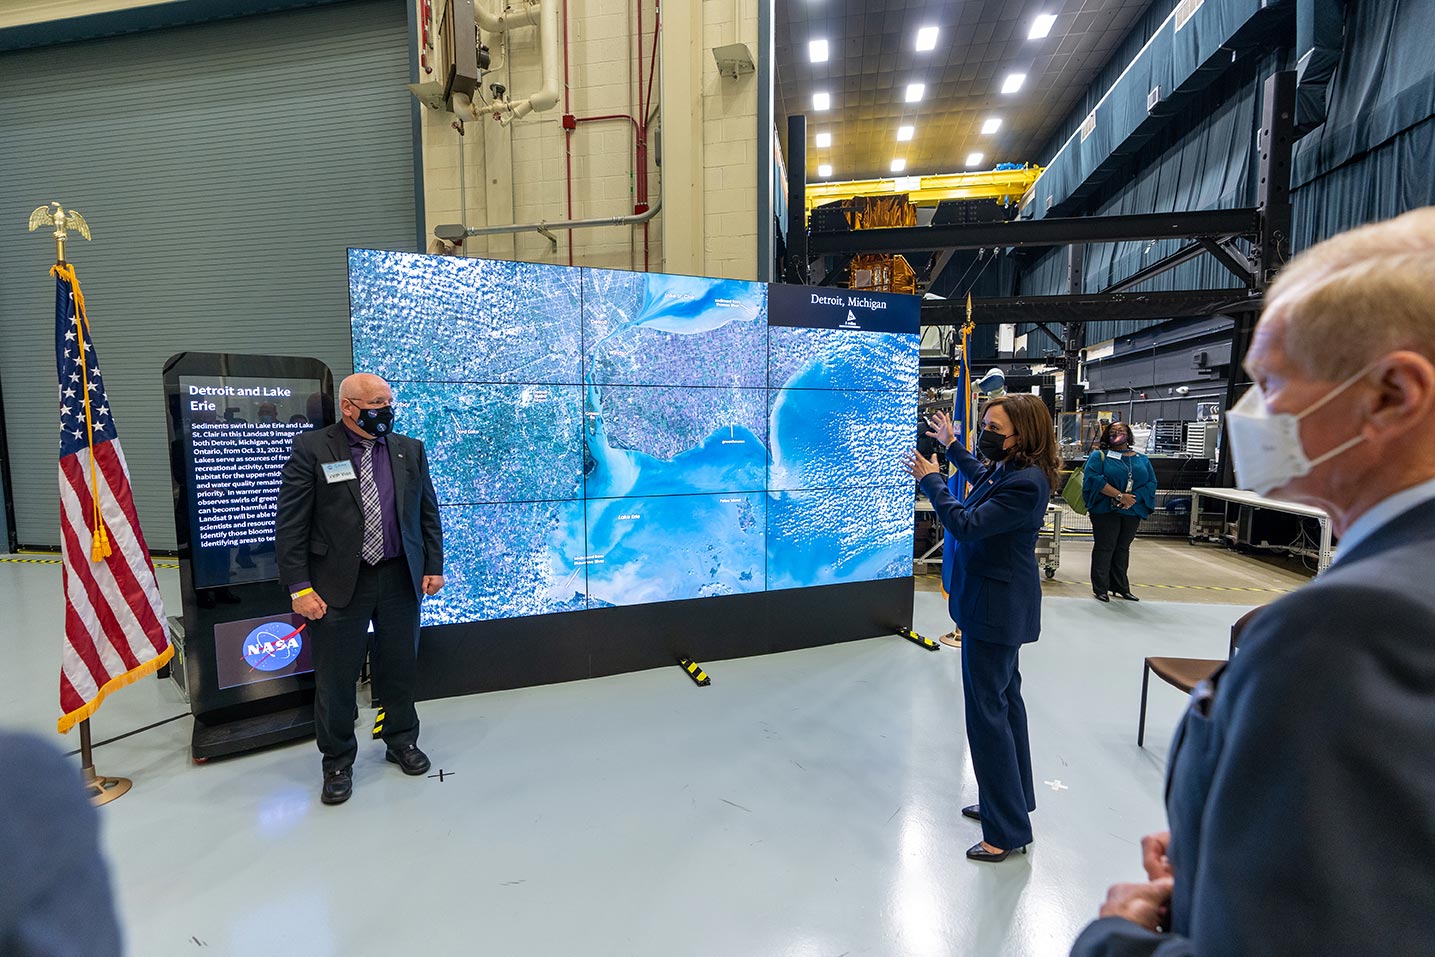 EM - Vice President Kamala Harris visits NASA to see vital work in climate science

